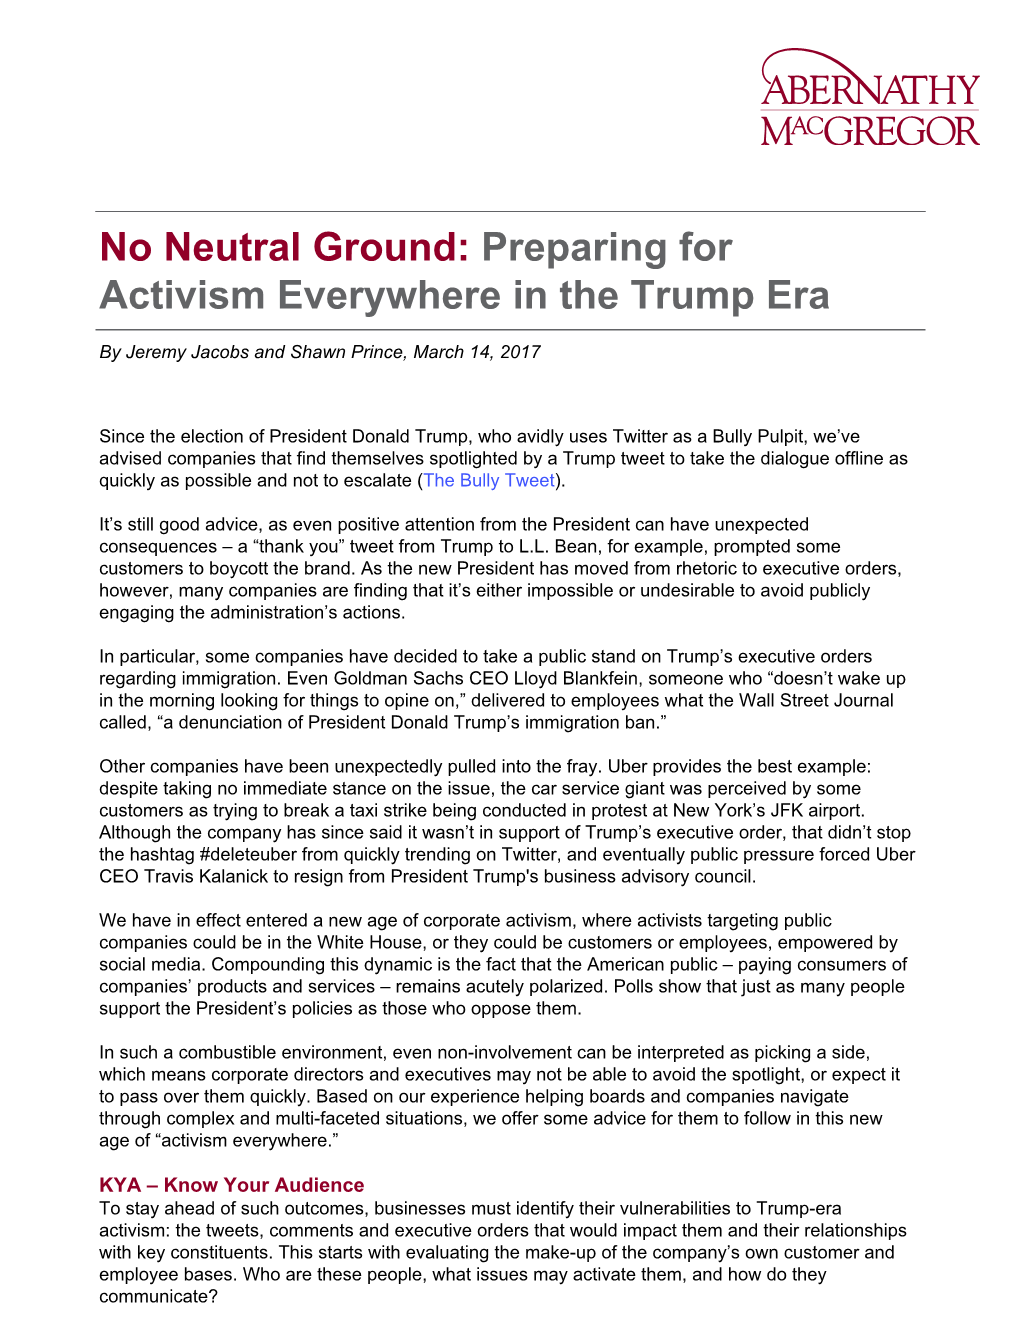 No Neutral Ground: Preparing for Activism Everywhere in the Trump Era